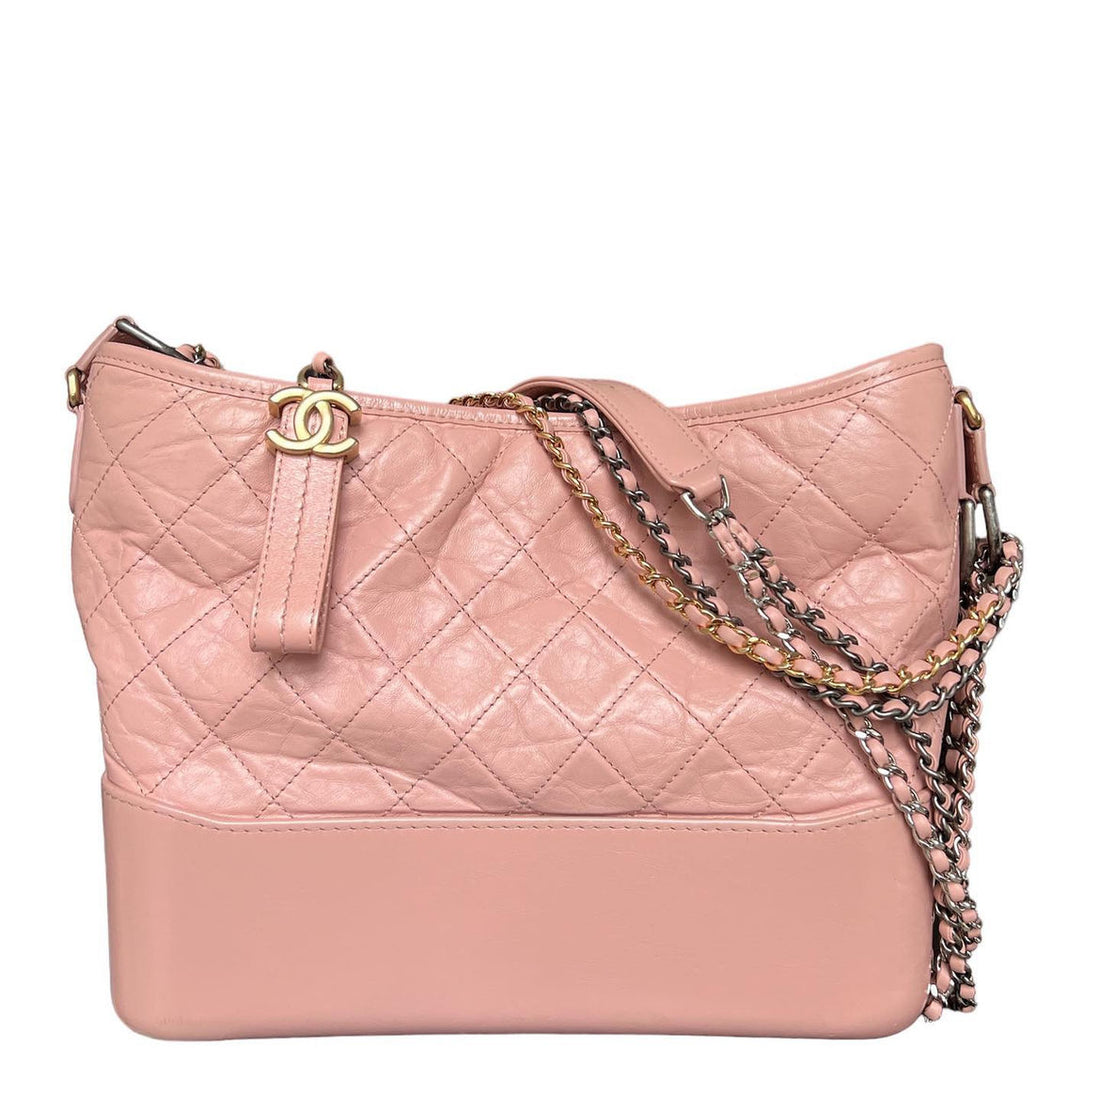 Chanel Tasche Gabrielle rosa